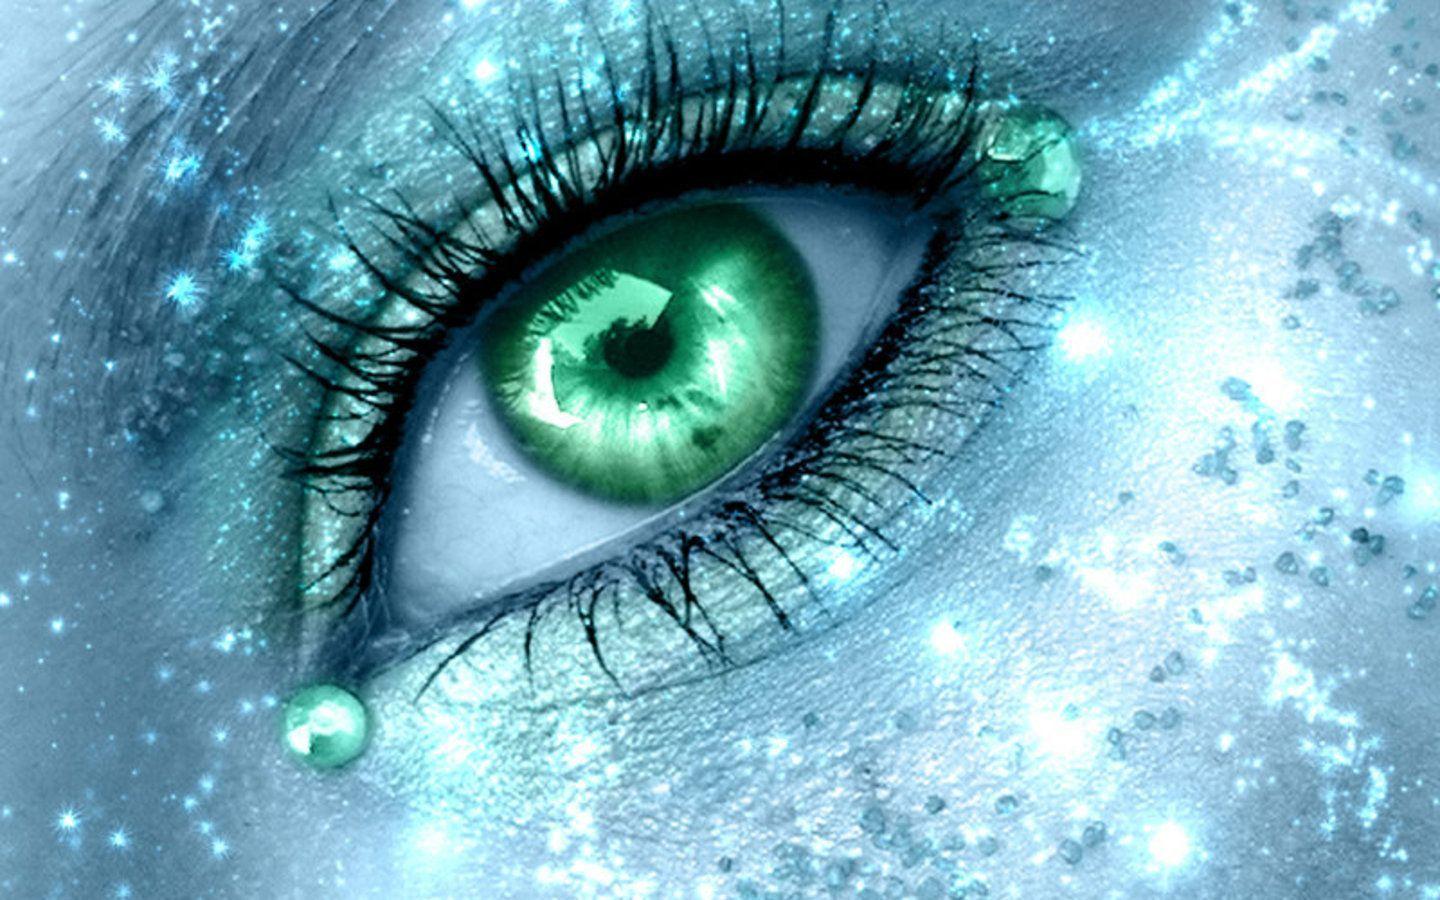 PIXHOME: Attractive Eyes wallpaper 1440x900. Eyes wallpaper, Cool eyes, Attractive eyes